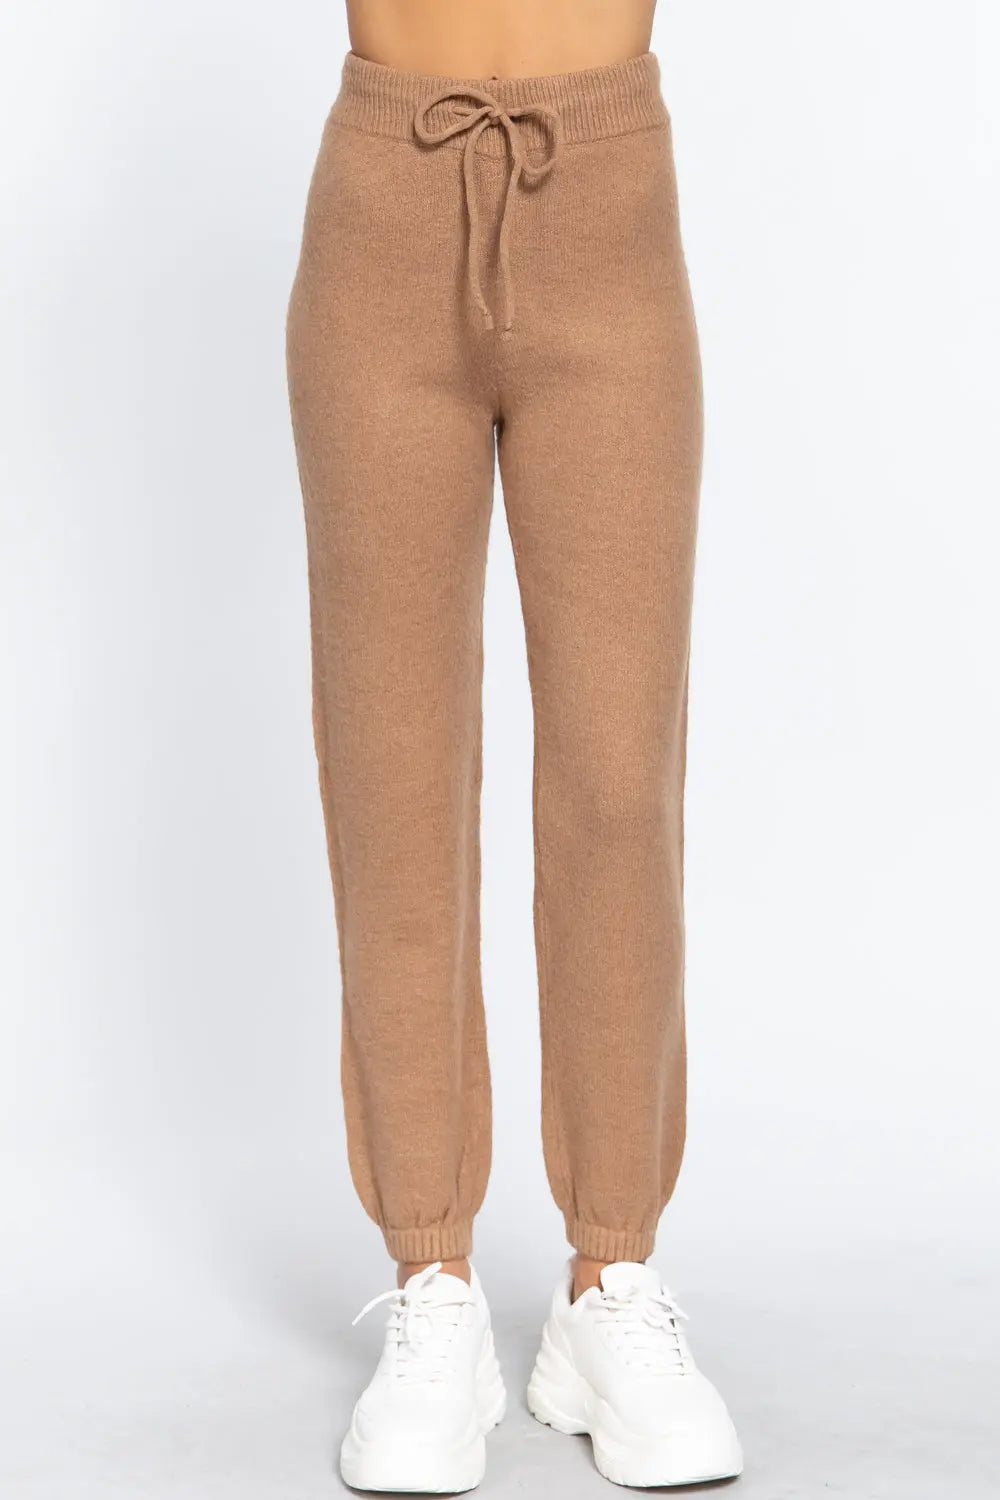 Drawstring Sweater Long Pants Sunny EvE Fashion